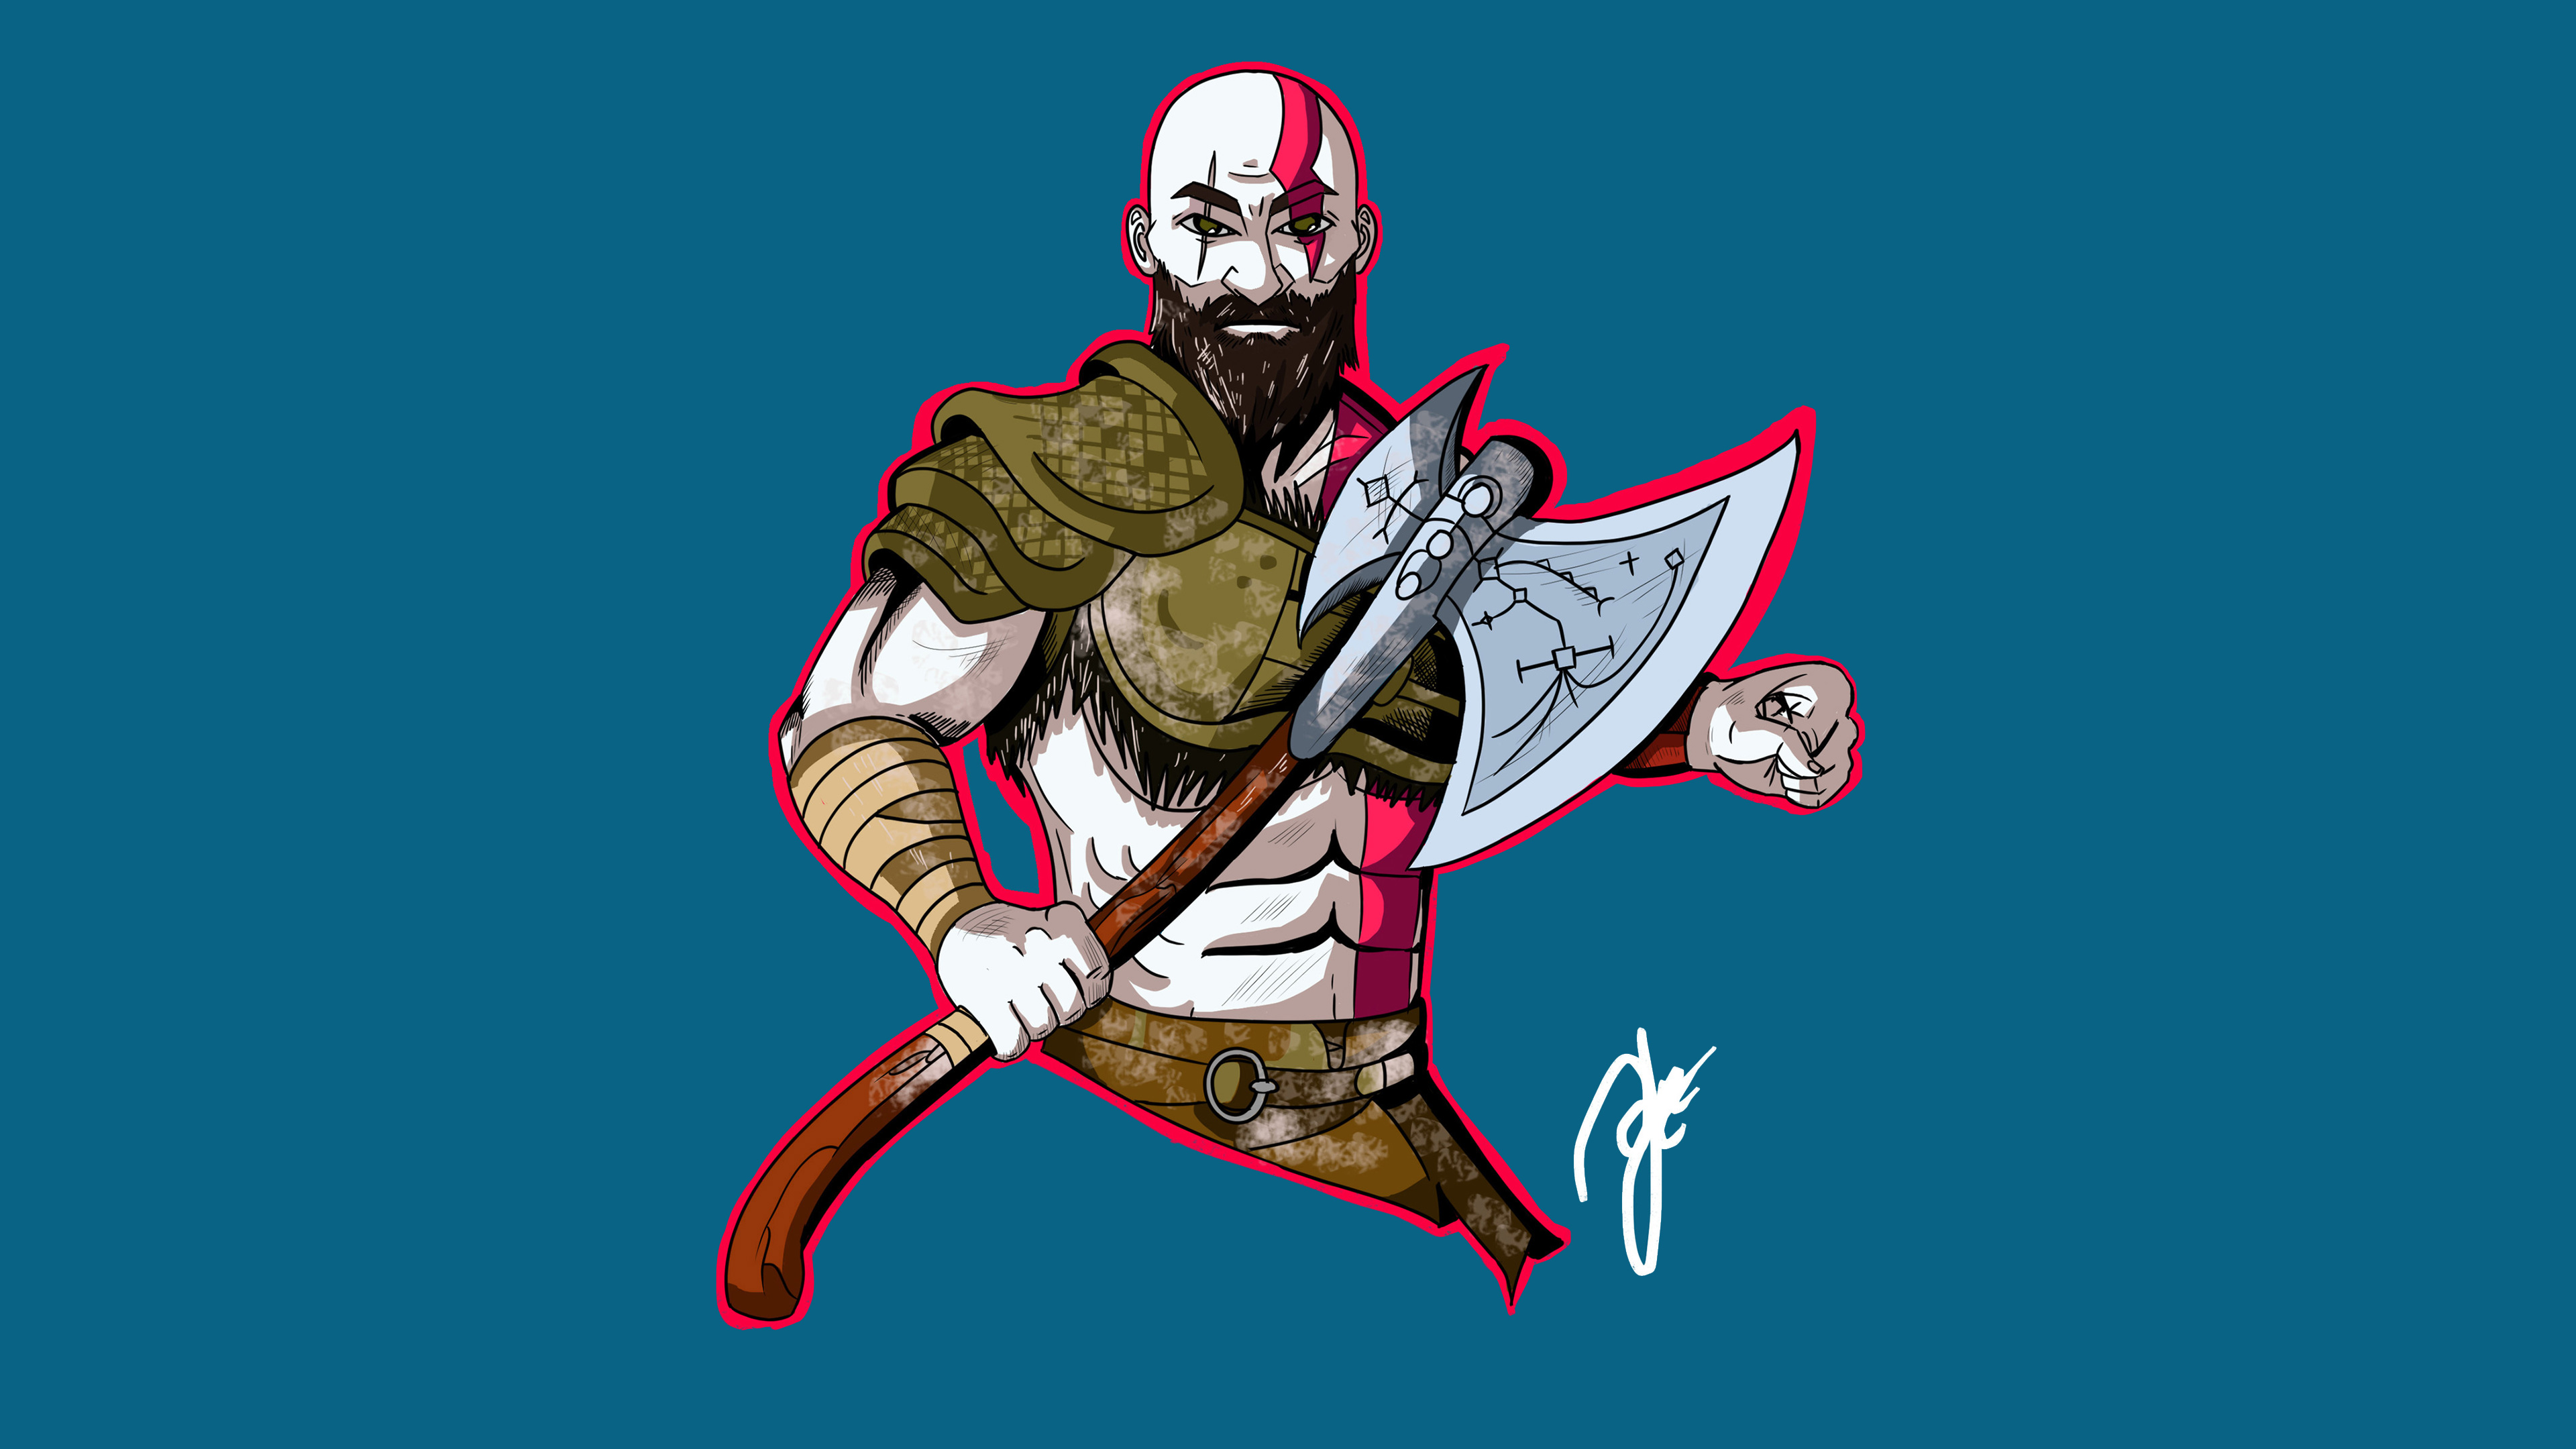  Kratos  God Of War Artwork 4k  HD Games 4k  Wallpapers  